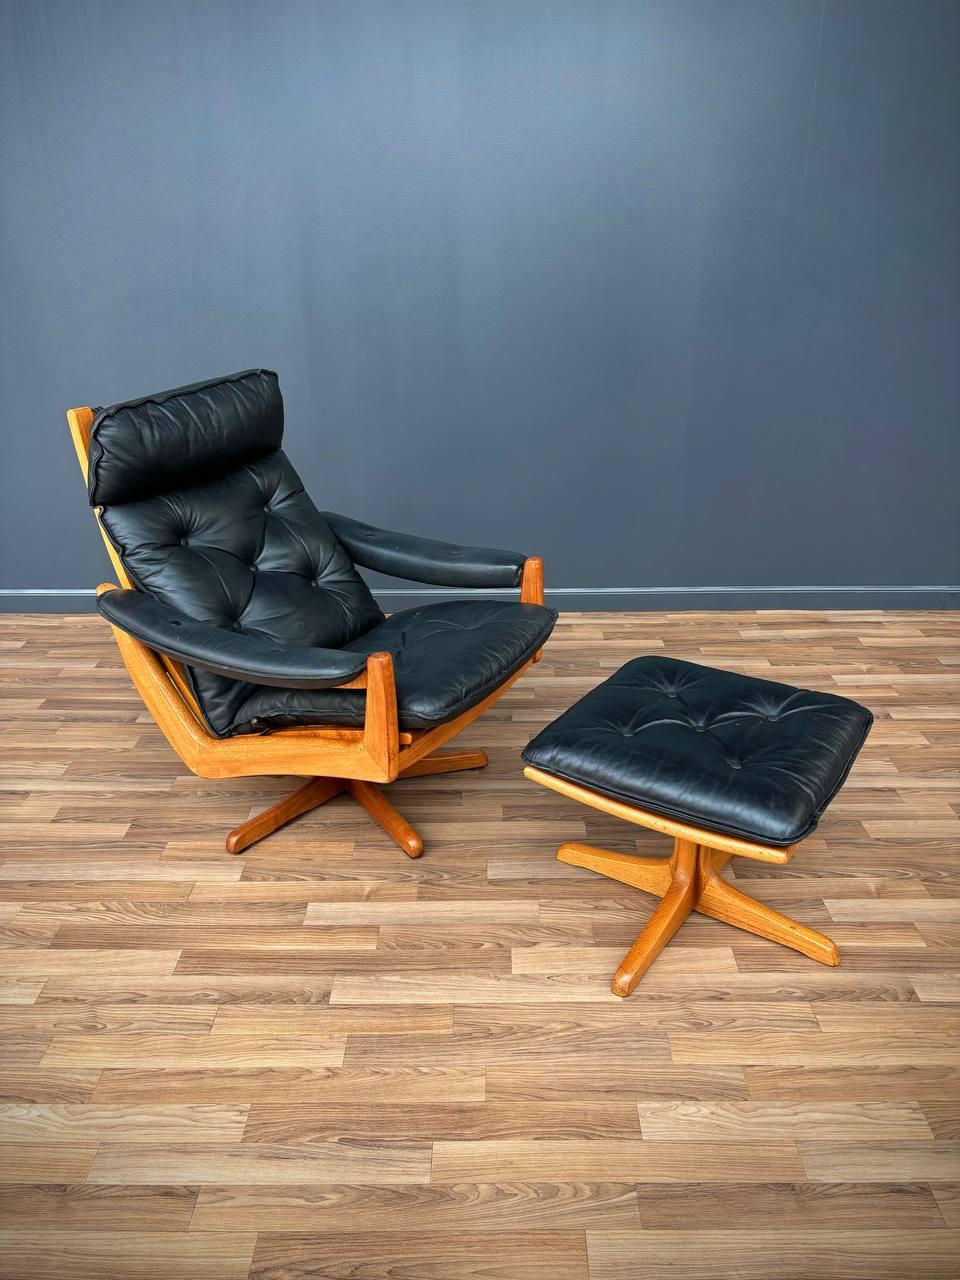 Original Vintage Condition

Materials: Teak, Black Leather

Dimensions: 
Chair:
35”H x 32”W x 32”D
Seat Height 17”
Ottoman:
16”H x 19”W x 19”D